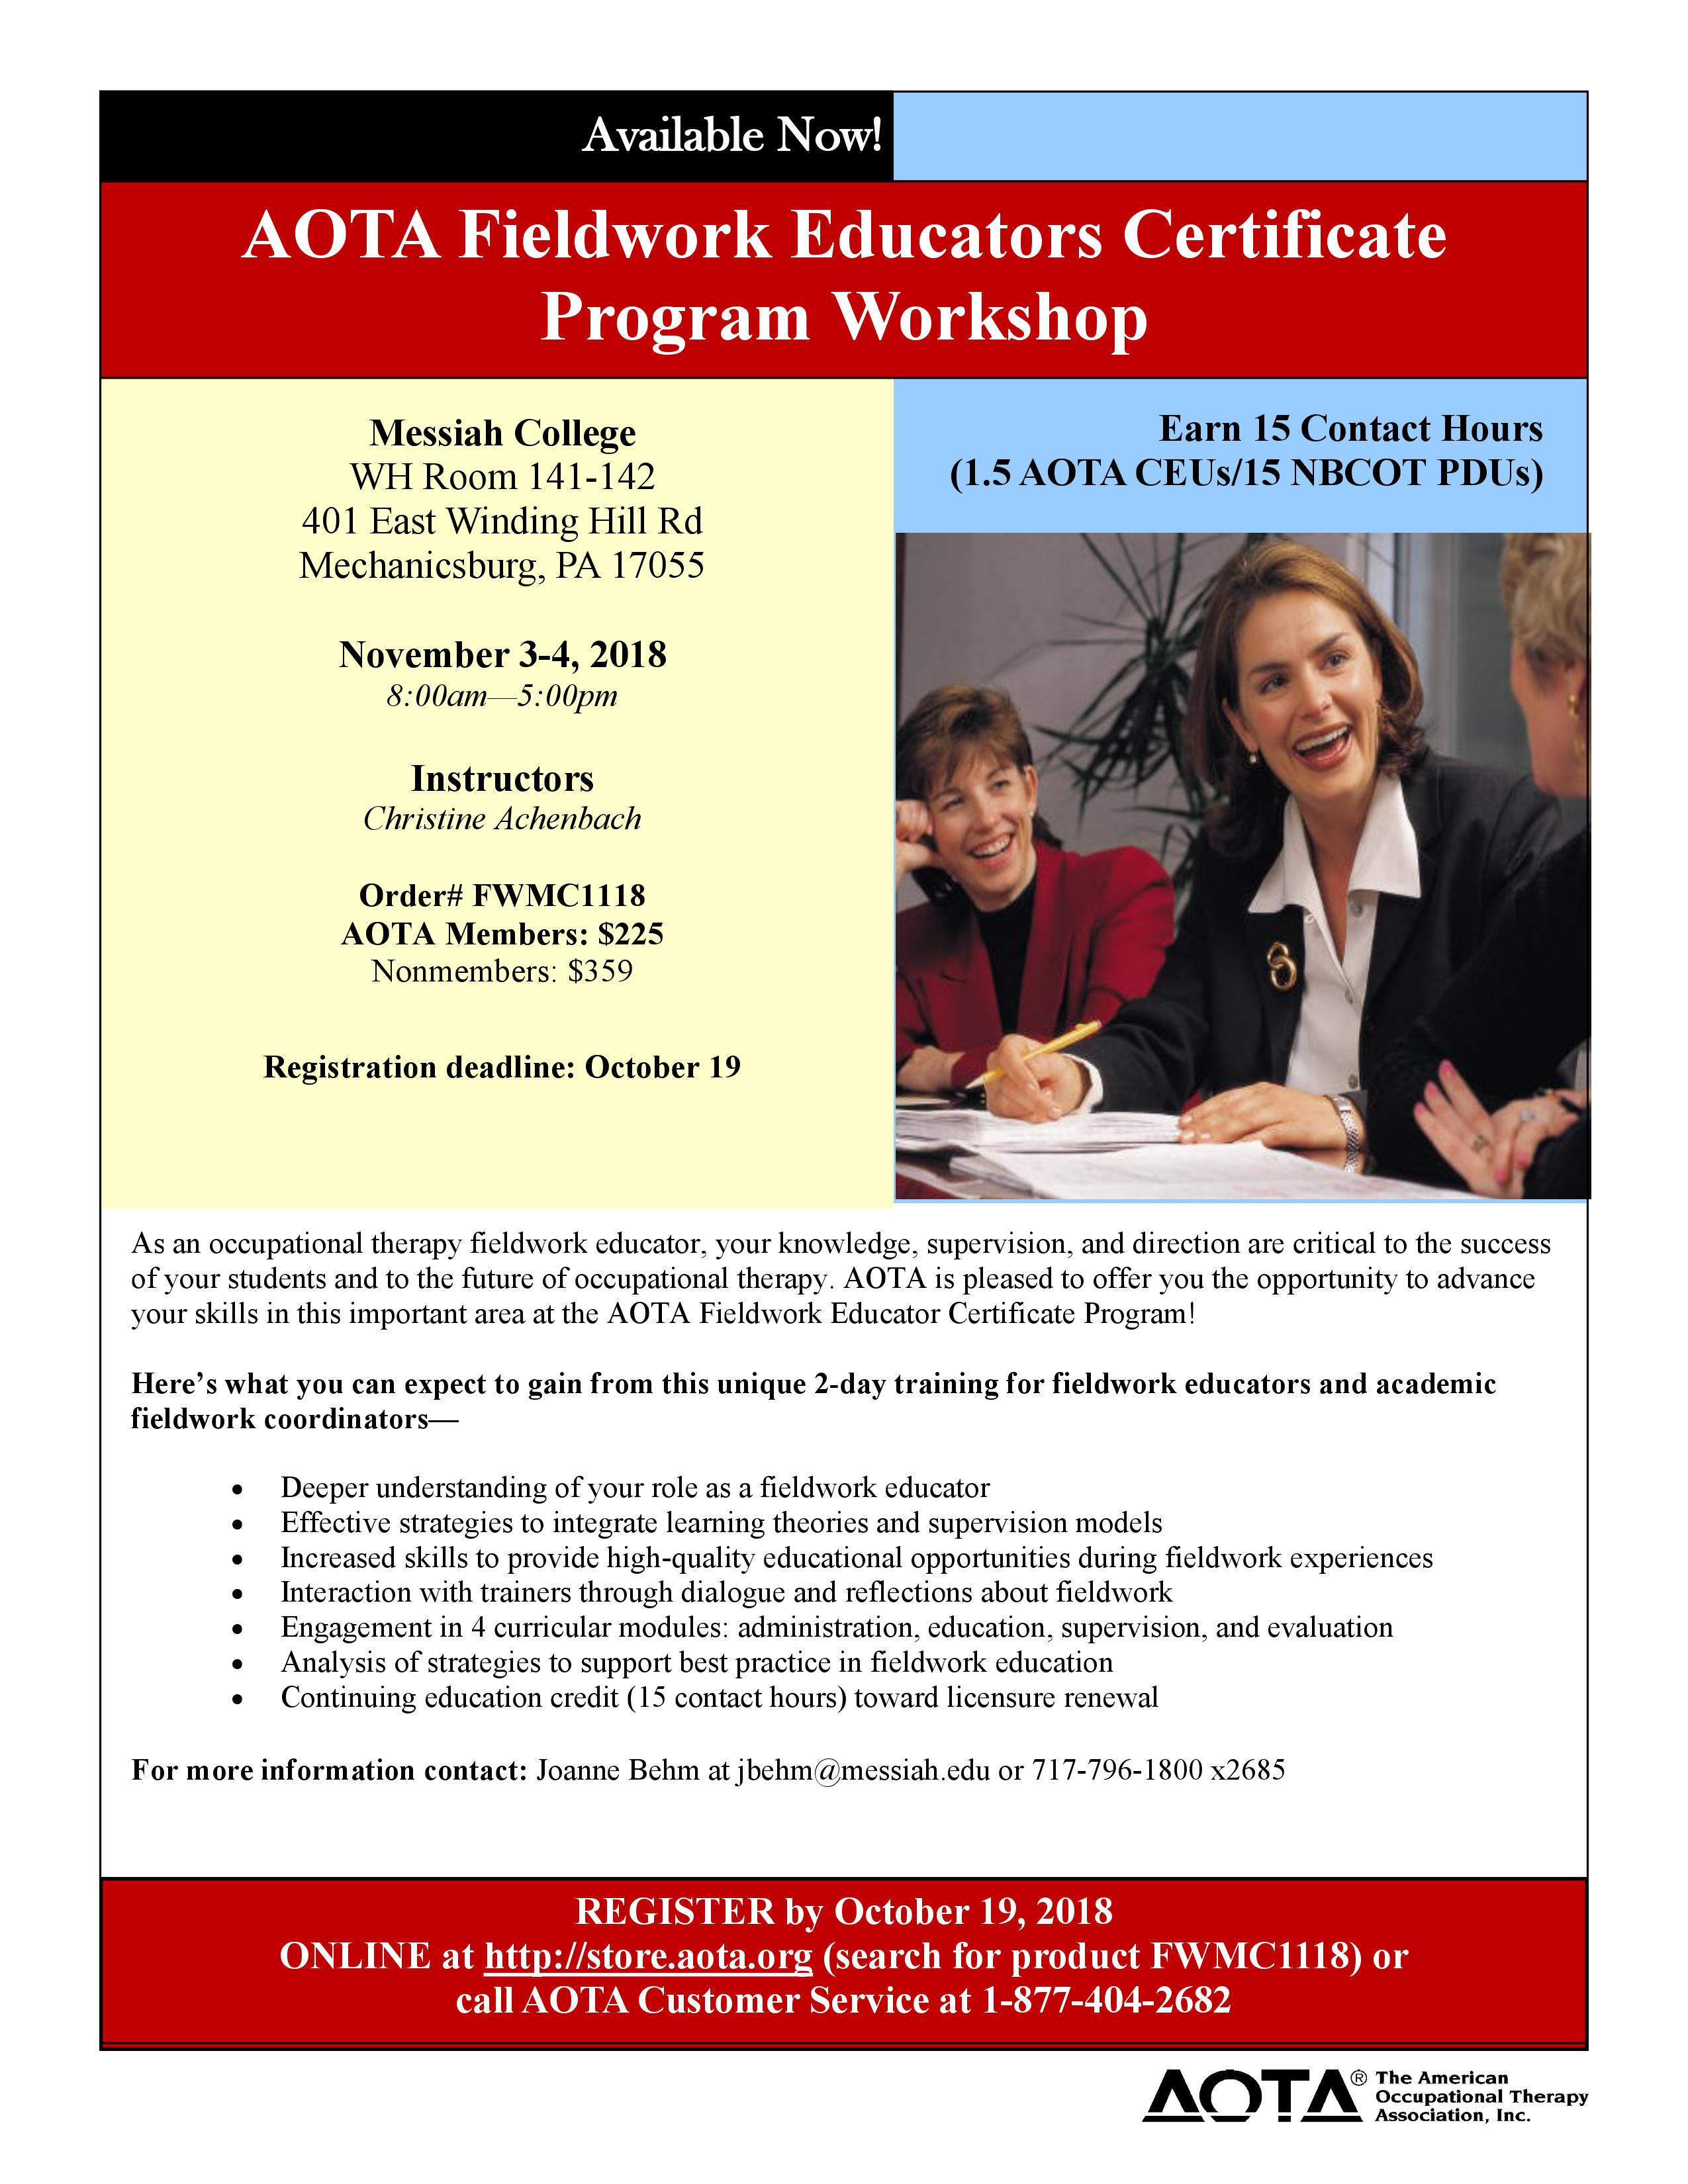 Flyer for Fieldwork Educator Certificate Program in November 2018